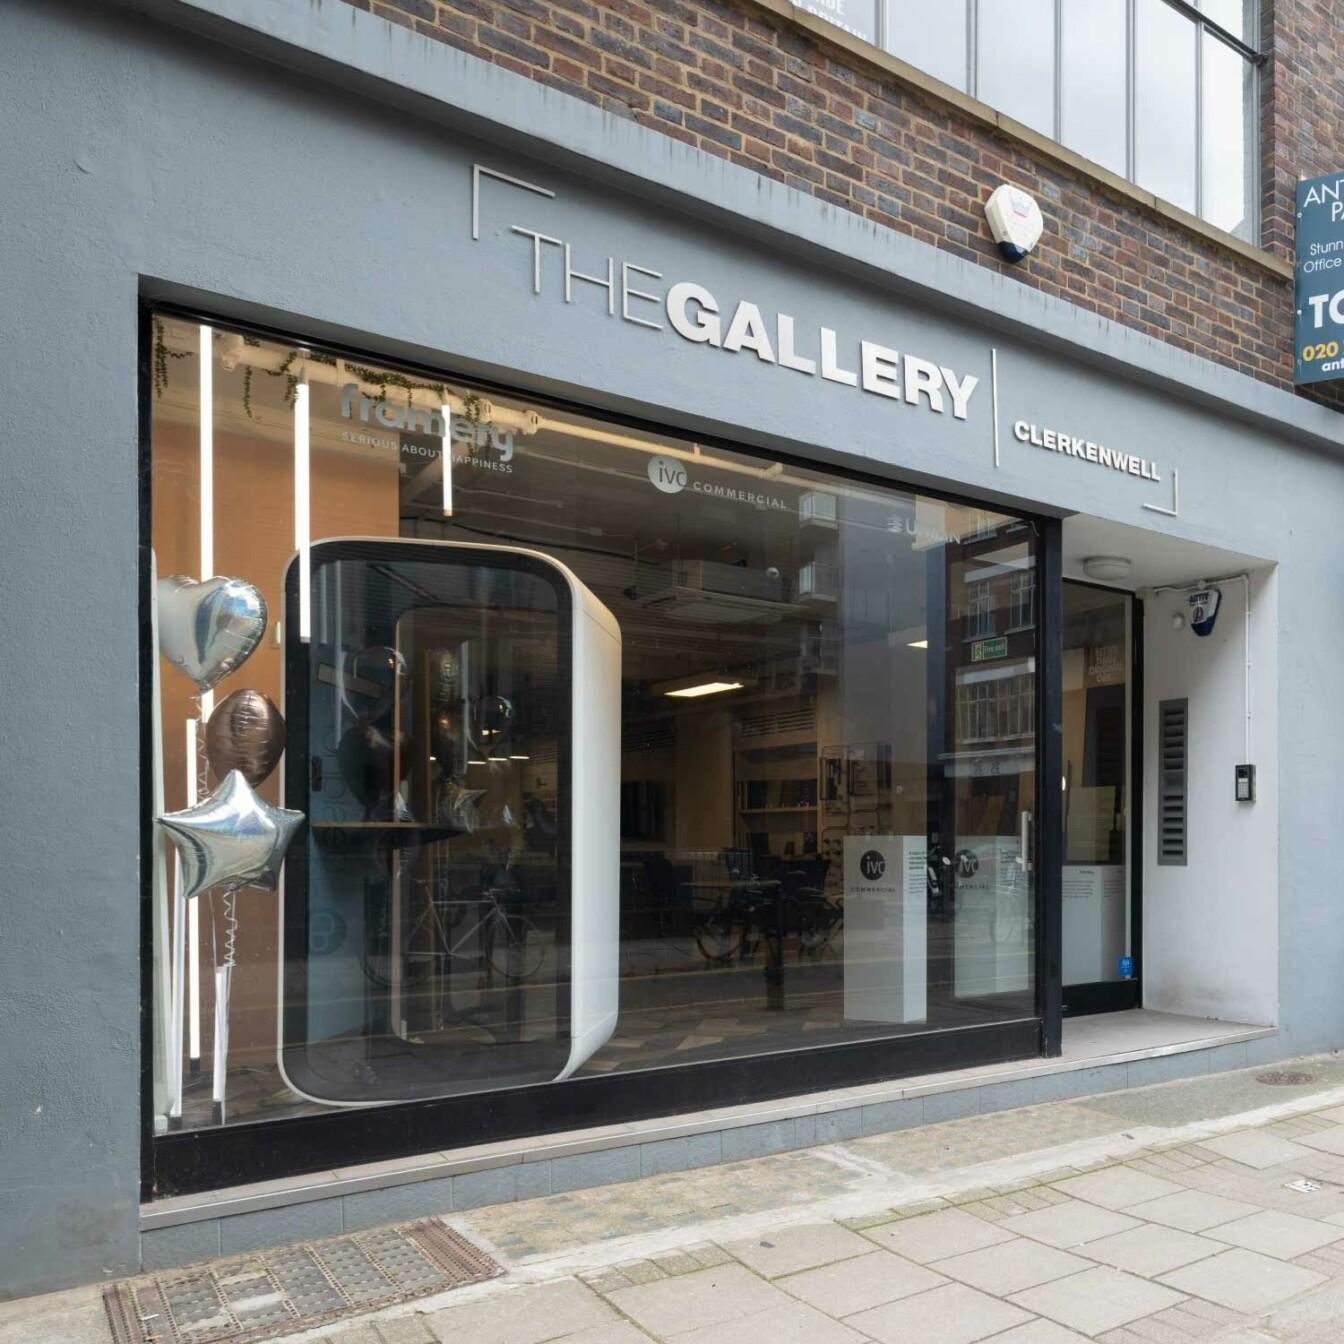 Framery showroom in the Gallery Clerkenwell, London.